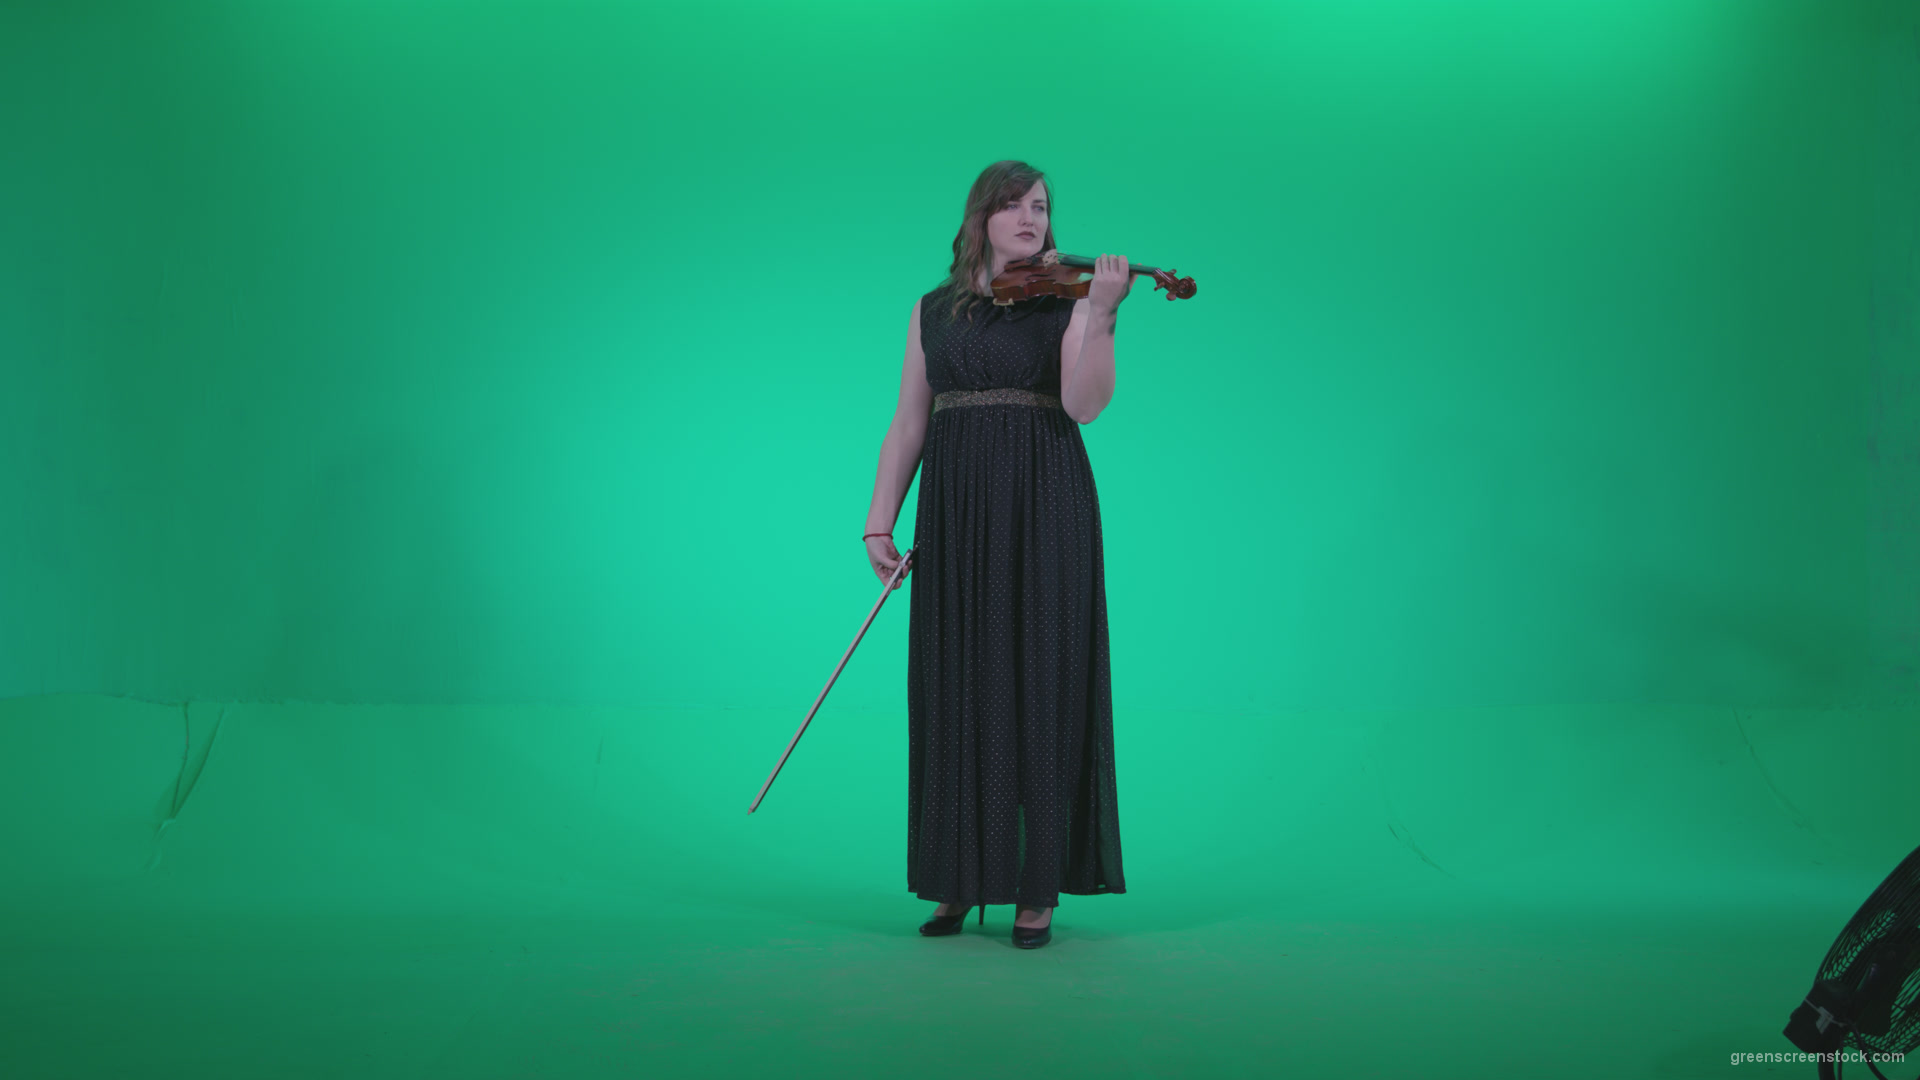 Professional-Violin-player-woman-z1_001 Green Screen Stock